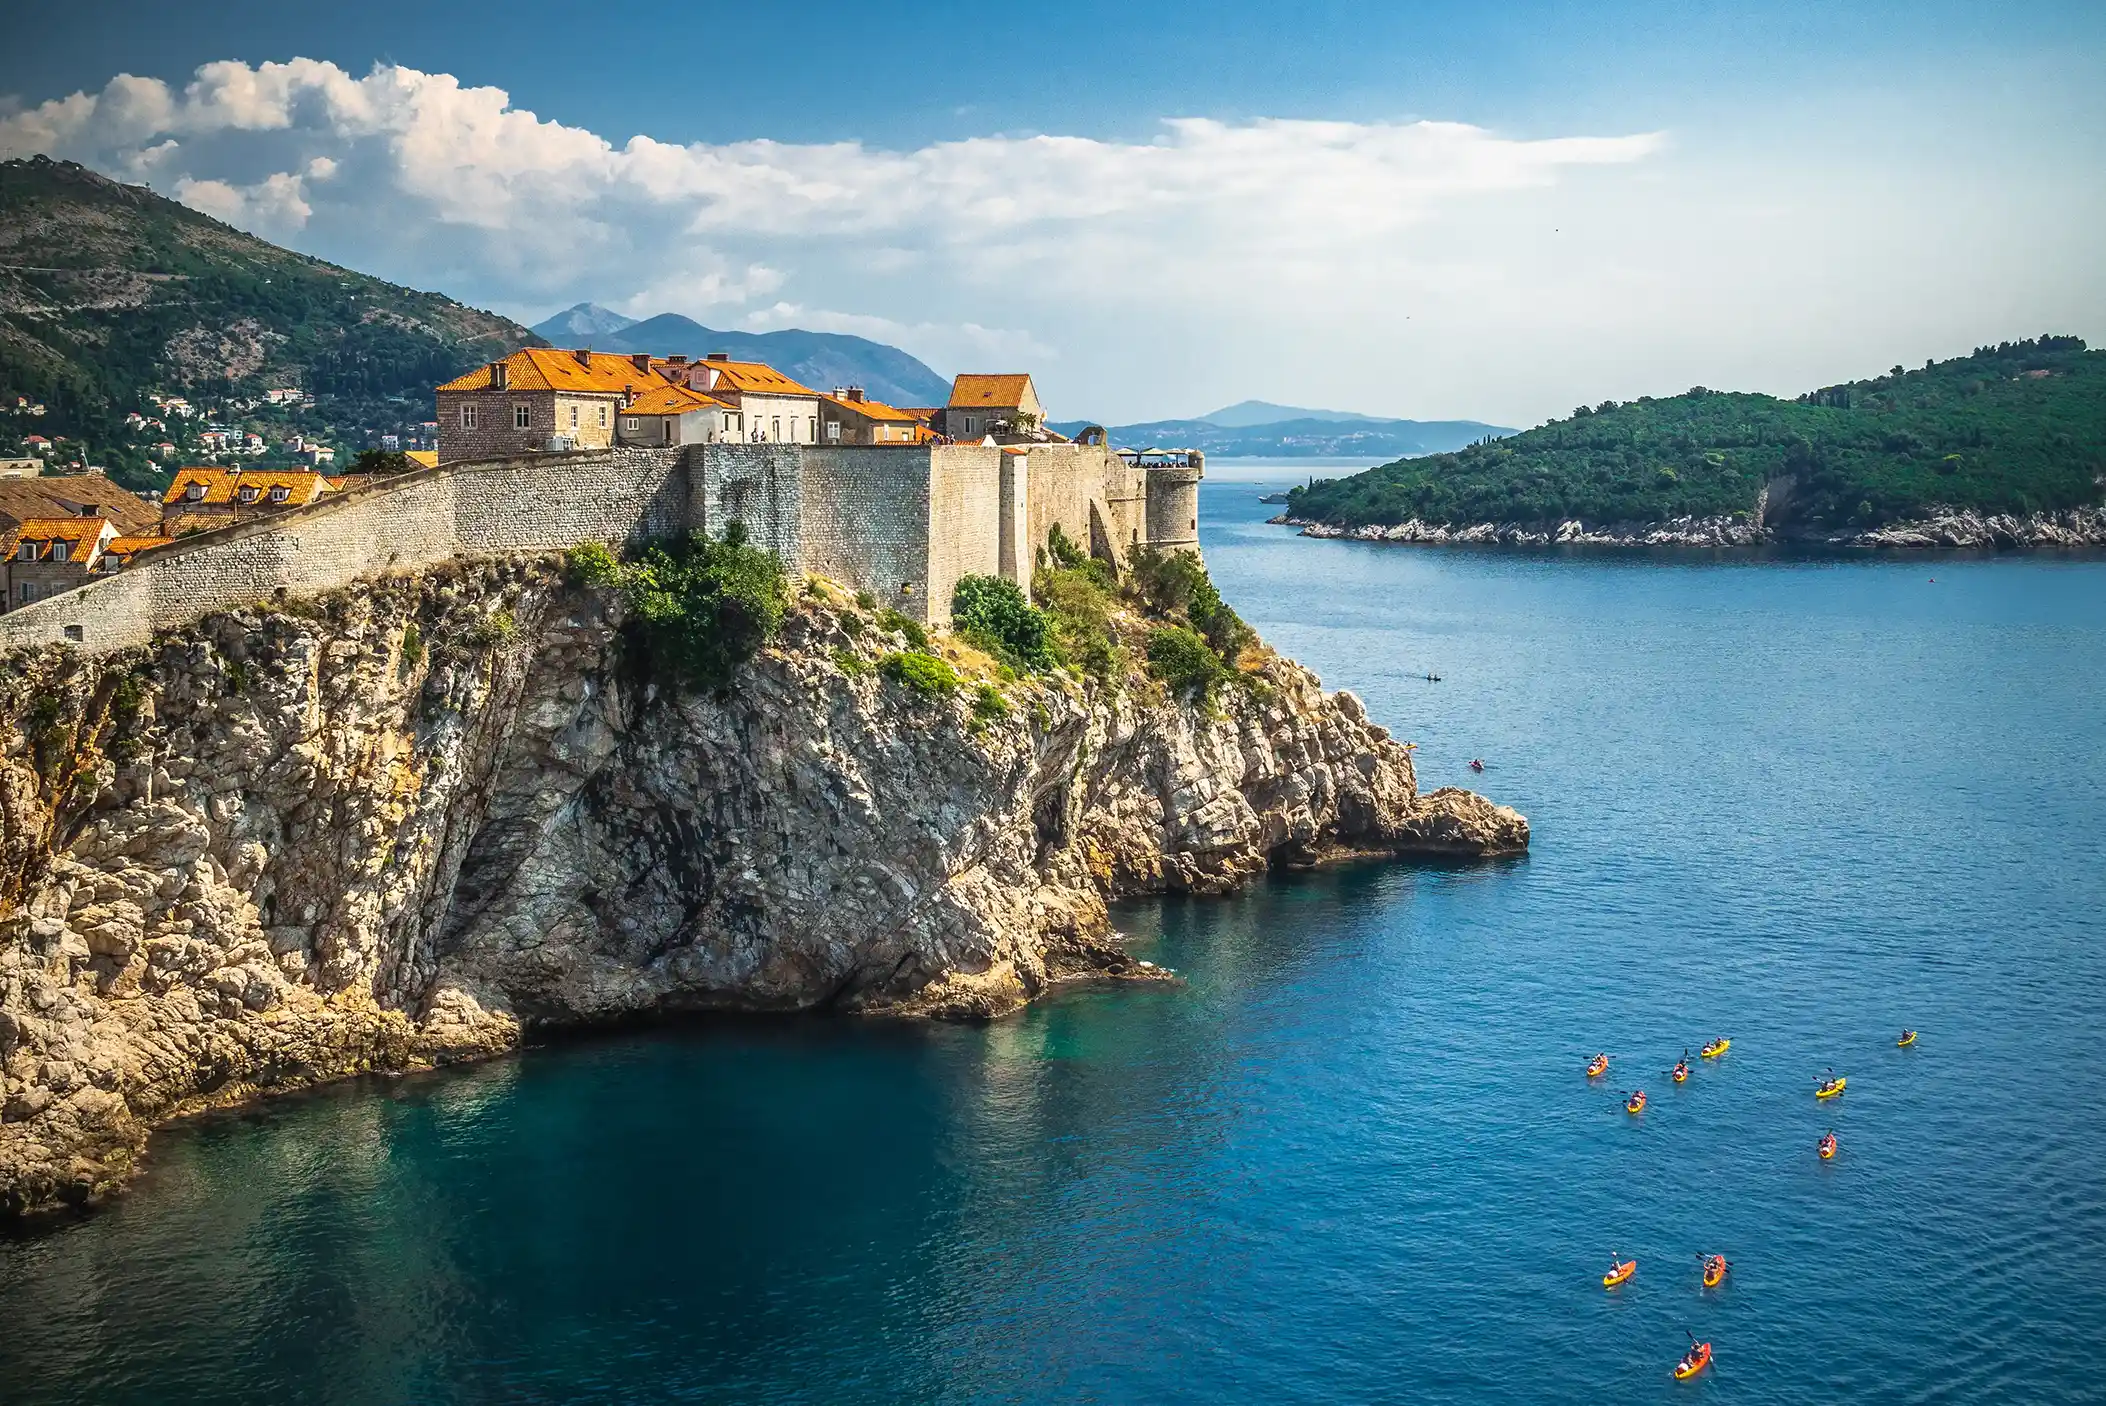 Old fort walls with ocean view in Dubrovnik, Croatia.